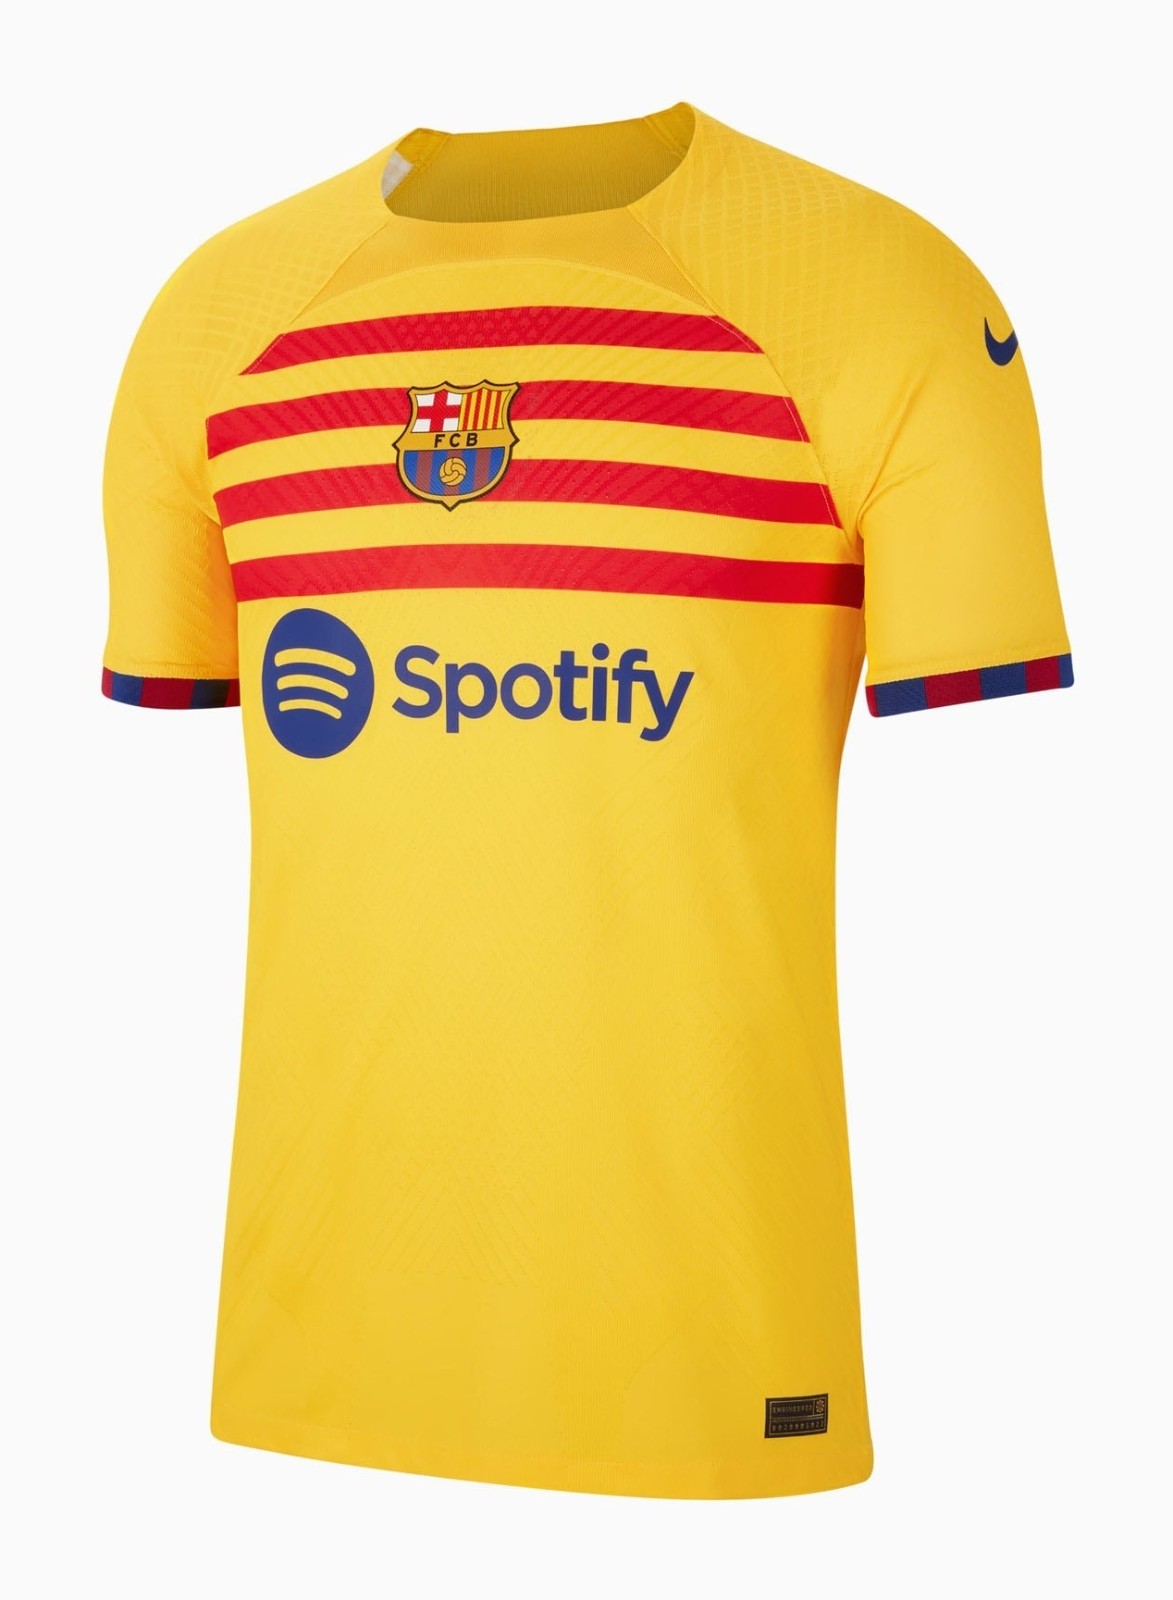 Camisa Barcelona IV 22/23 - Torcedor Nike Masculino - Amarelo/Vermelho